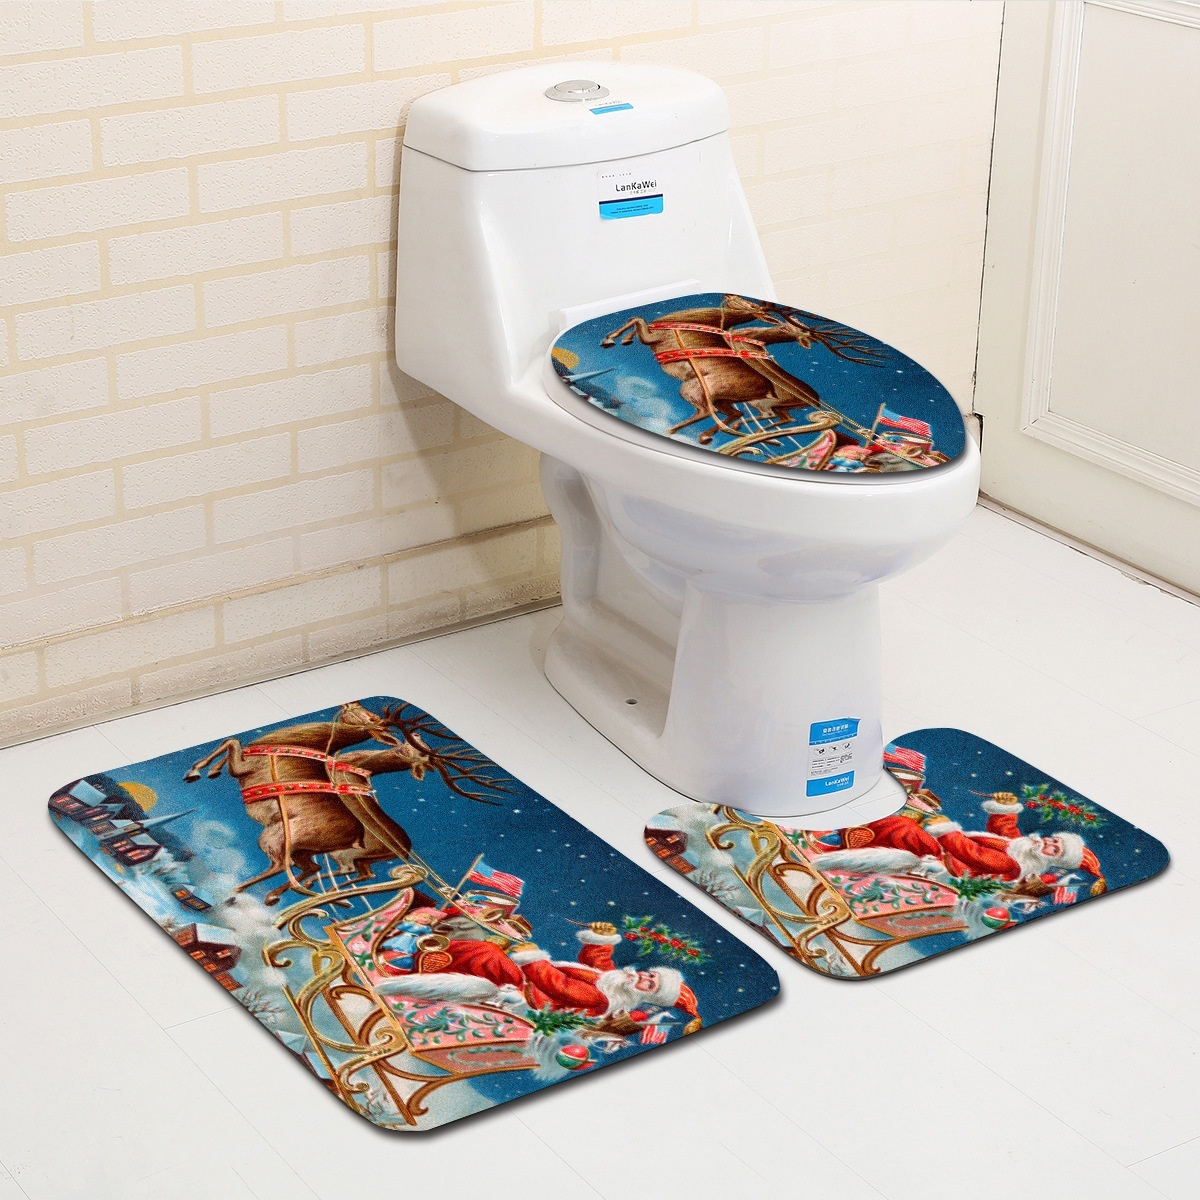 

Washable Bathroom Toilet Seat Covers Bathroom Carpet Anti Slip Bathroom Mat Set Bath Floor Mats